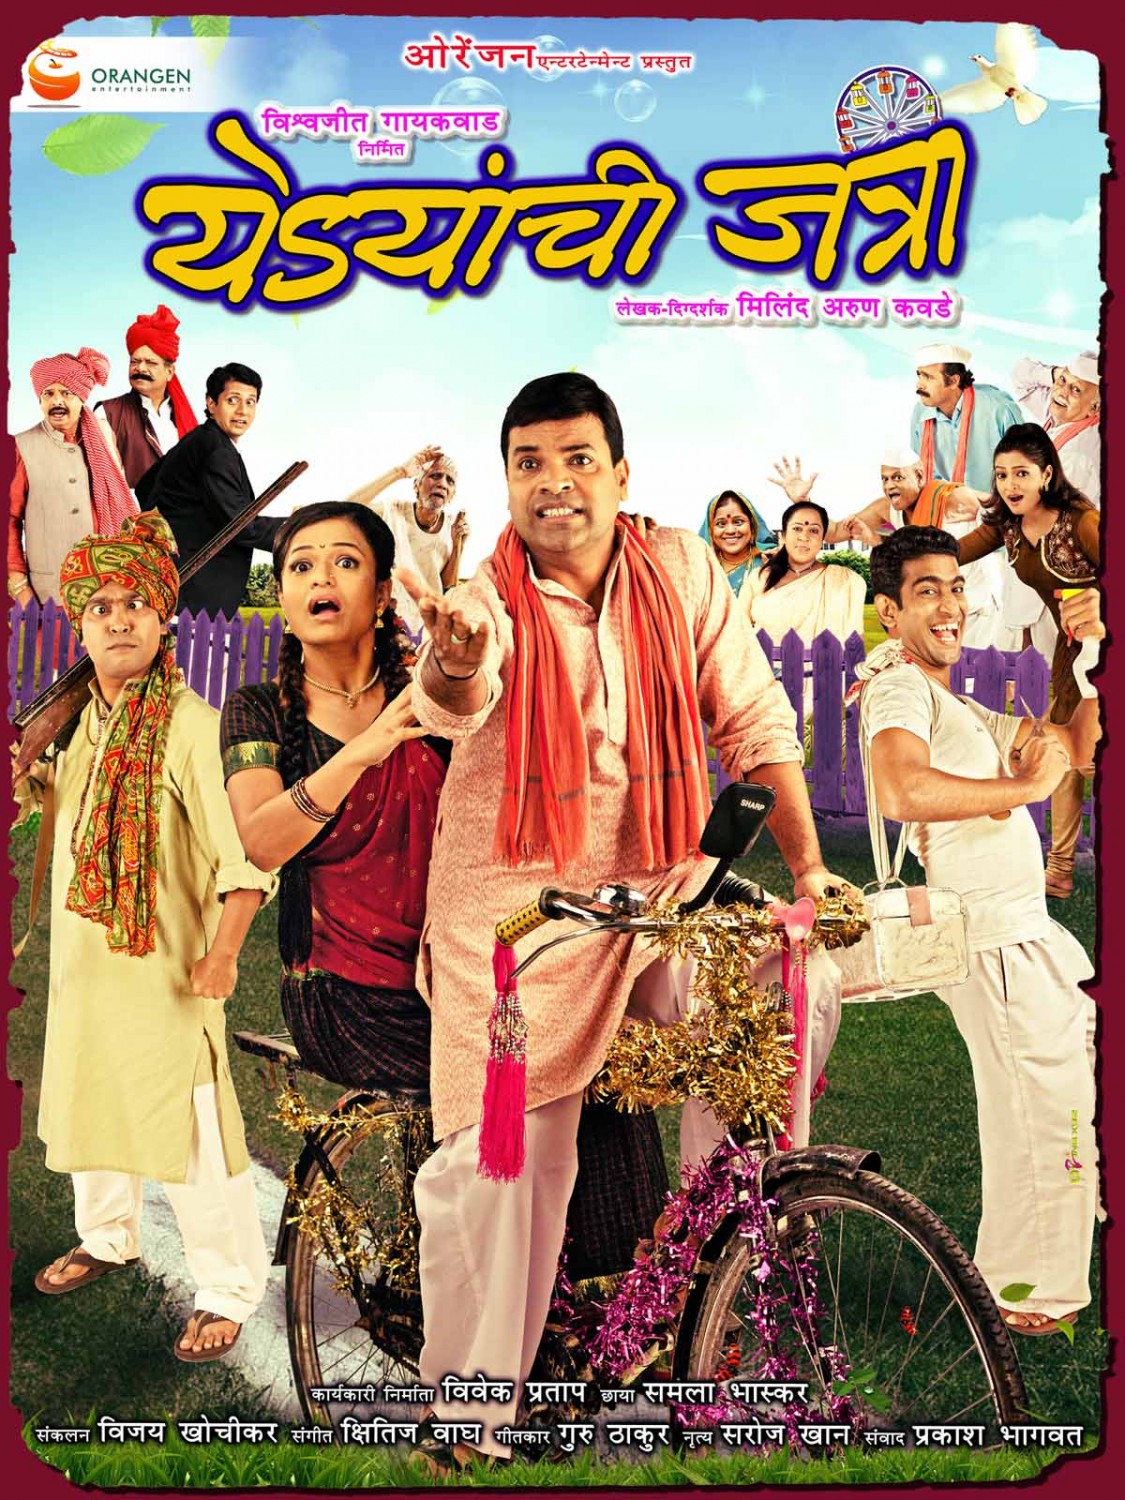 Extra Large Movie Poster Image for Yedyanchi Jatraa (#7 of 7)